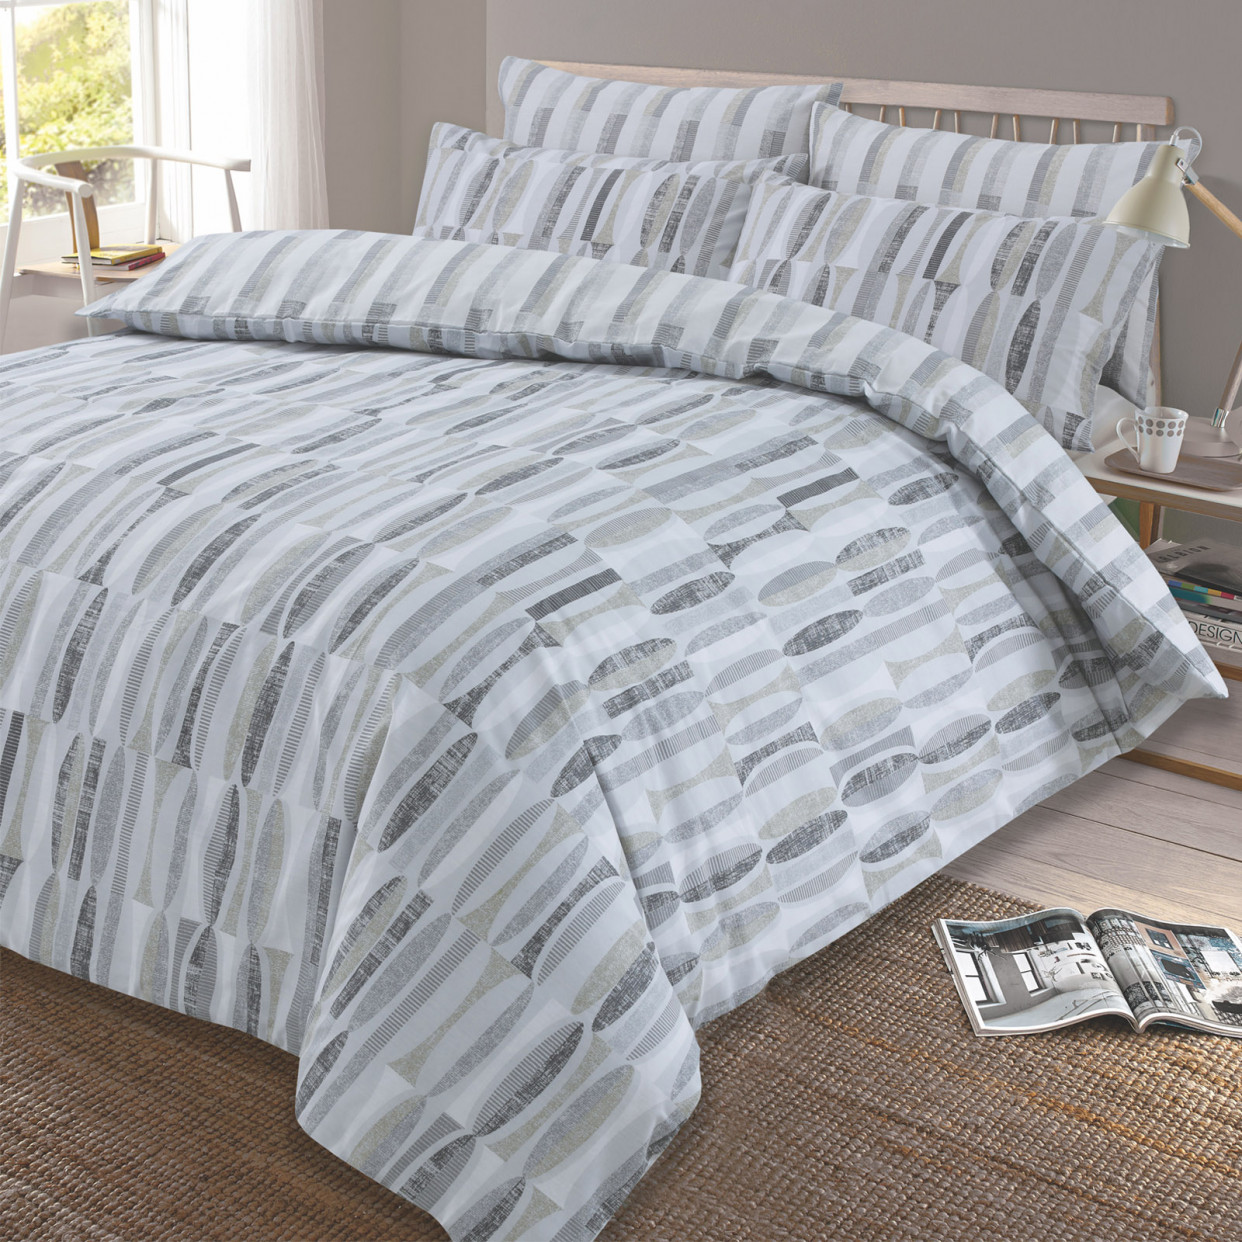 Dreamscene Ellipse Duvet Cover with Pillow Case Reversible Geometric Bedding Set, Charcoal Grey Silver - Superking>